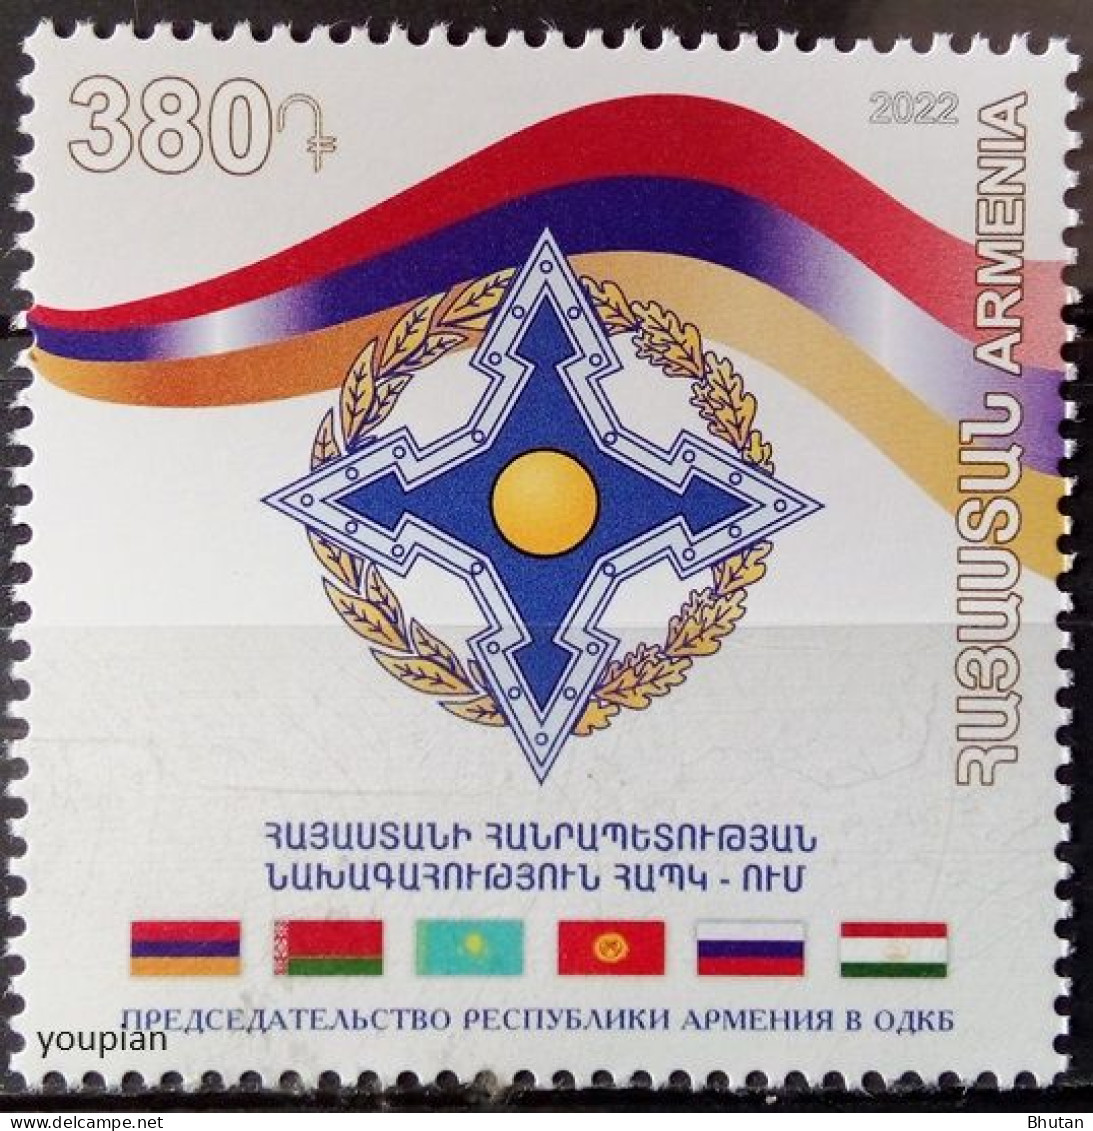 Armenia 2022, Presidency Of The Republic Of Armenia In The CSTO, MNH Single Stamp - Armenia